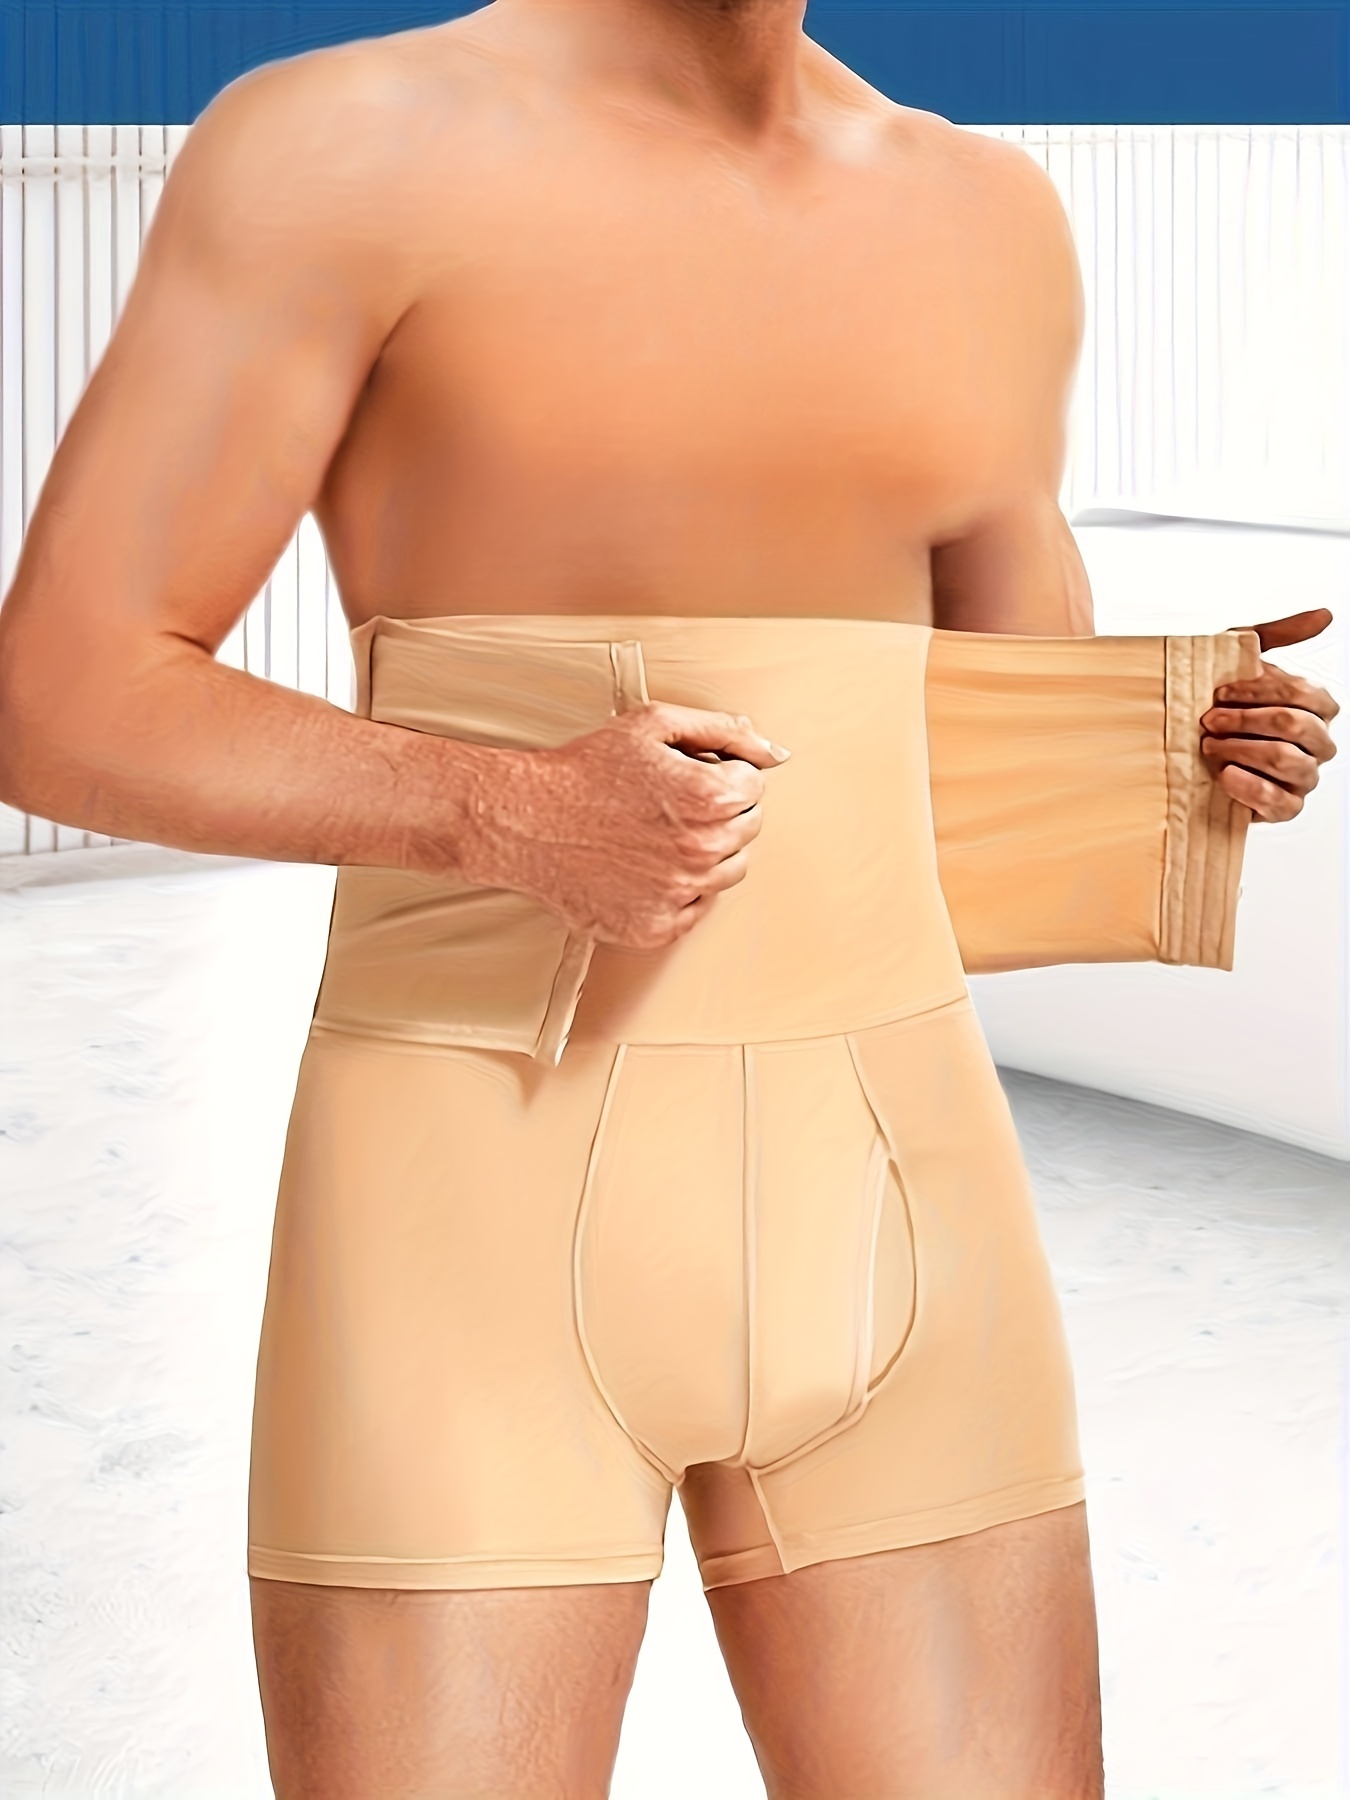 Men Shapewear Body Shaper Abdomen Girdle Modeling Strap Control Panties Slim  Waist Leg Tummy Trimmer Male Control Boxer Pant - AliExpress